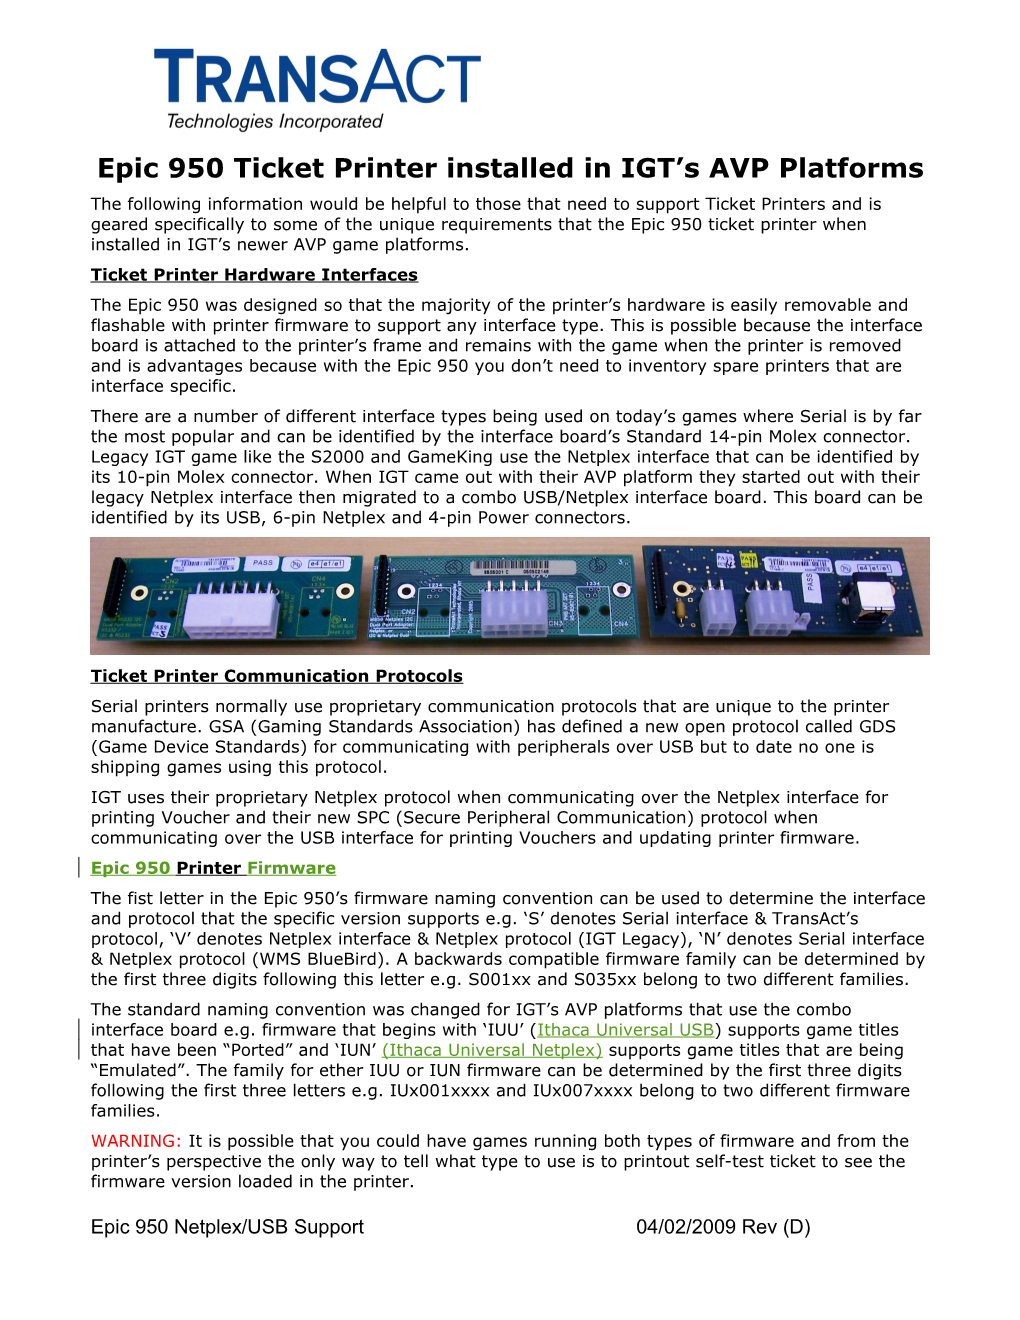 Epic 950 Ticket Printer Installed in IGT Trimline Games